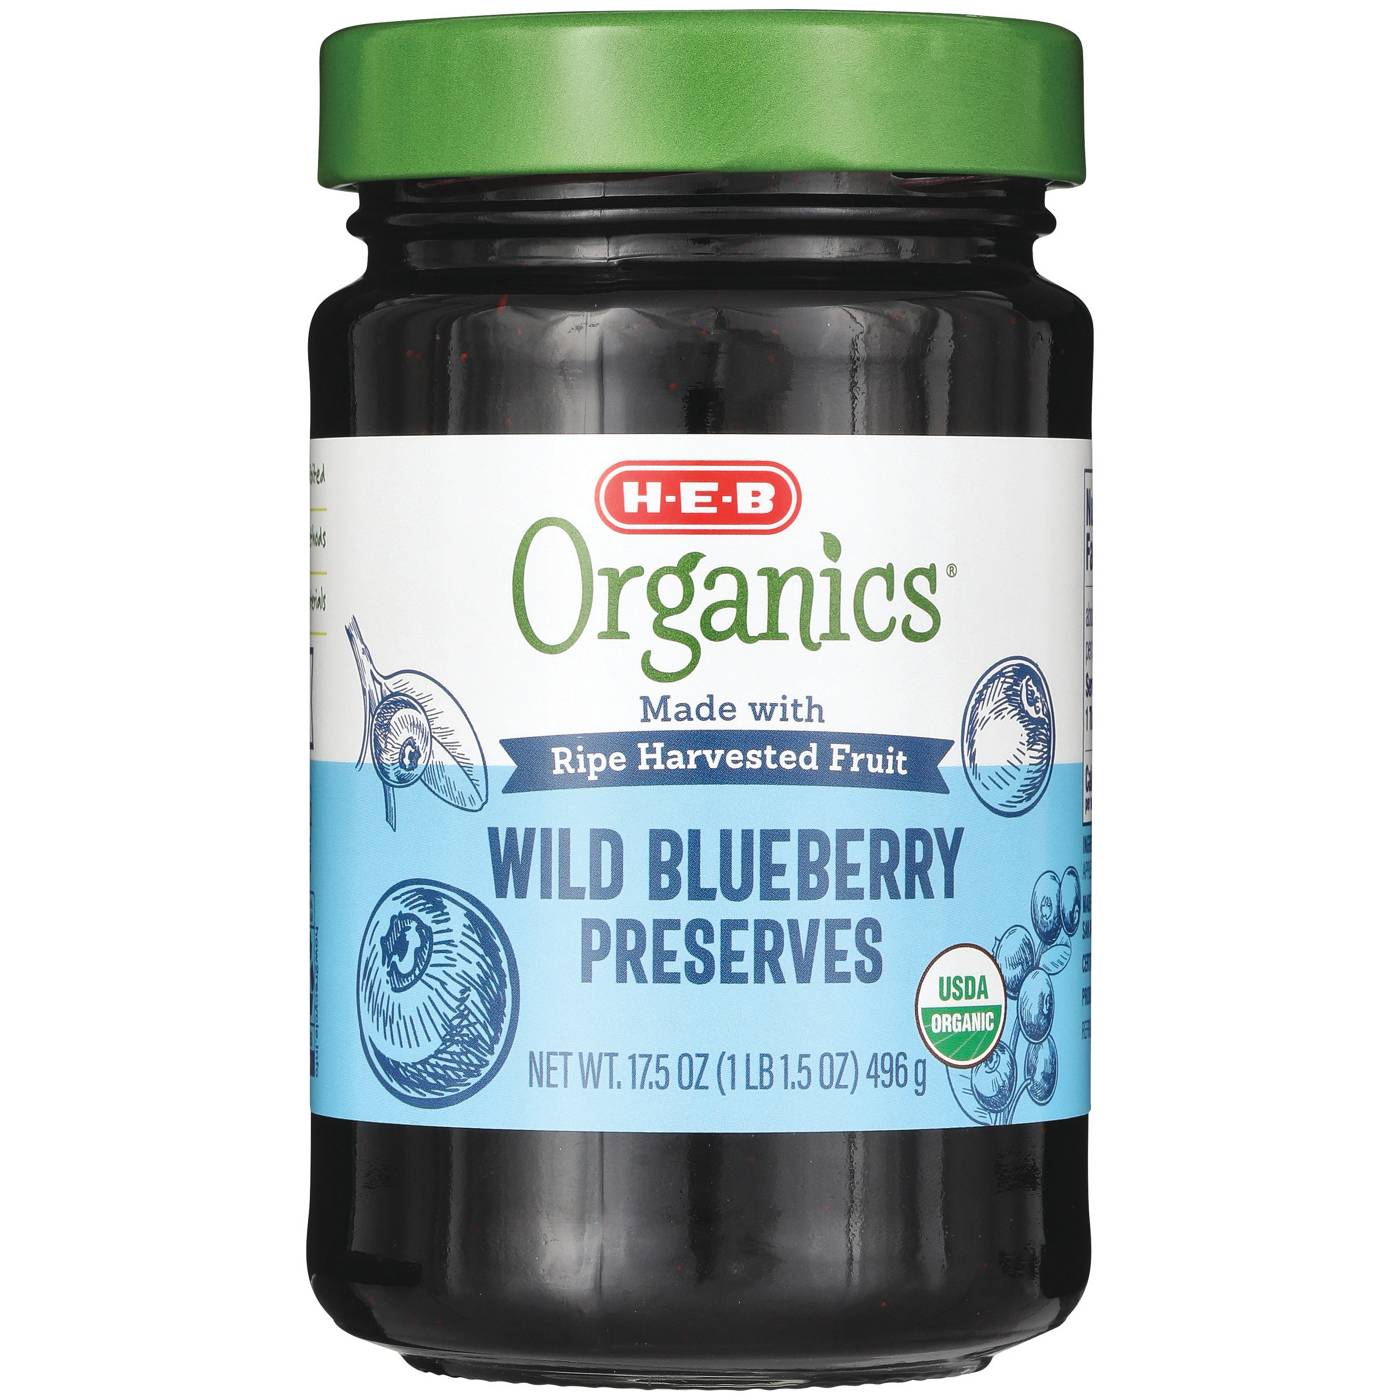 H-E-B Organics Wild Blueberry Preserves; image 1 of 2